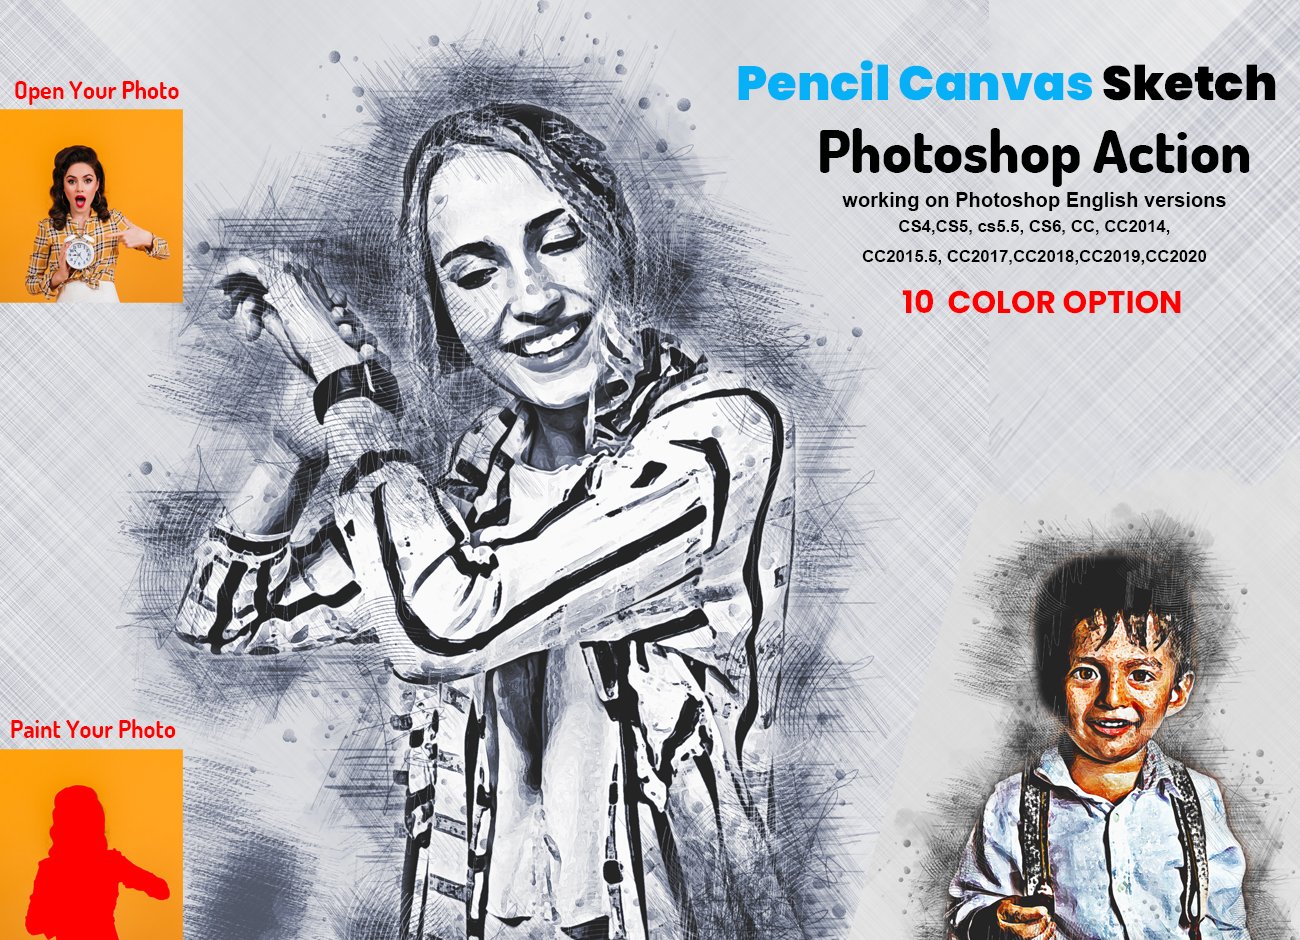 Pencil Canvas Sketch PS Actioncover image.